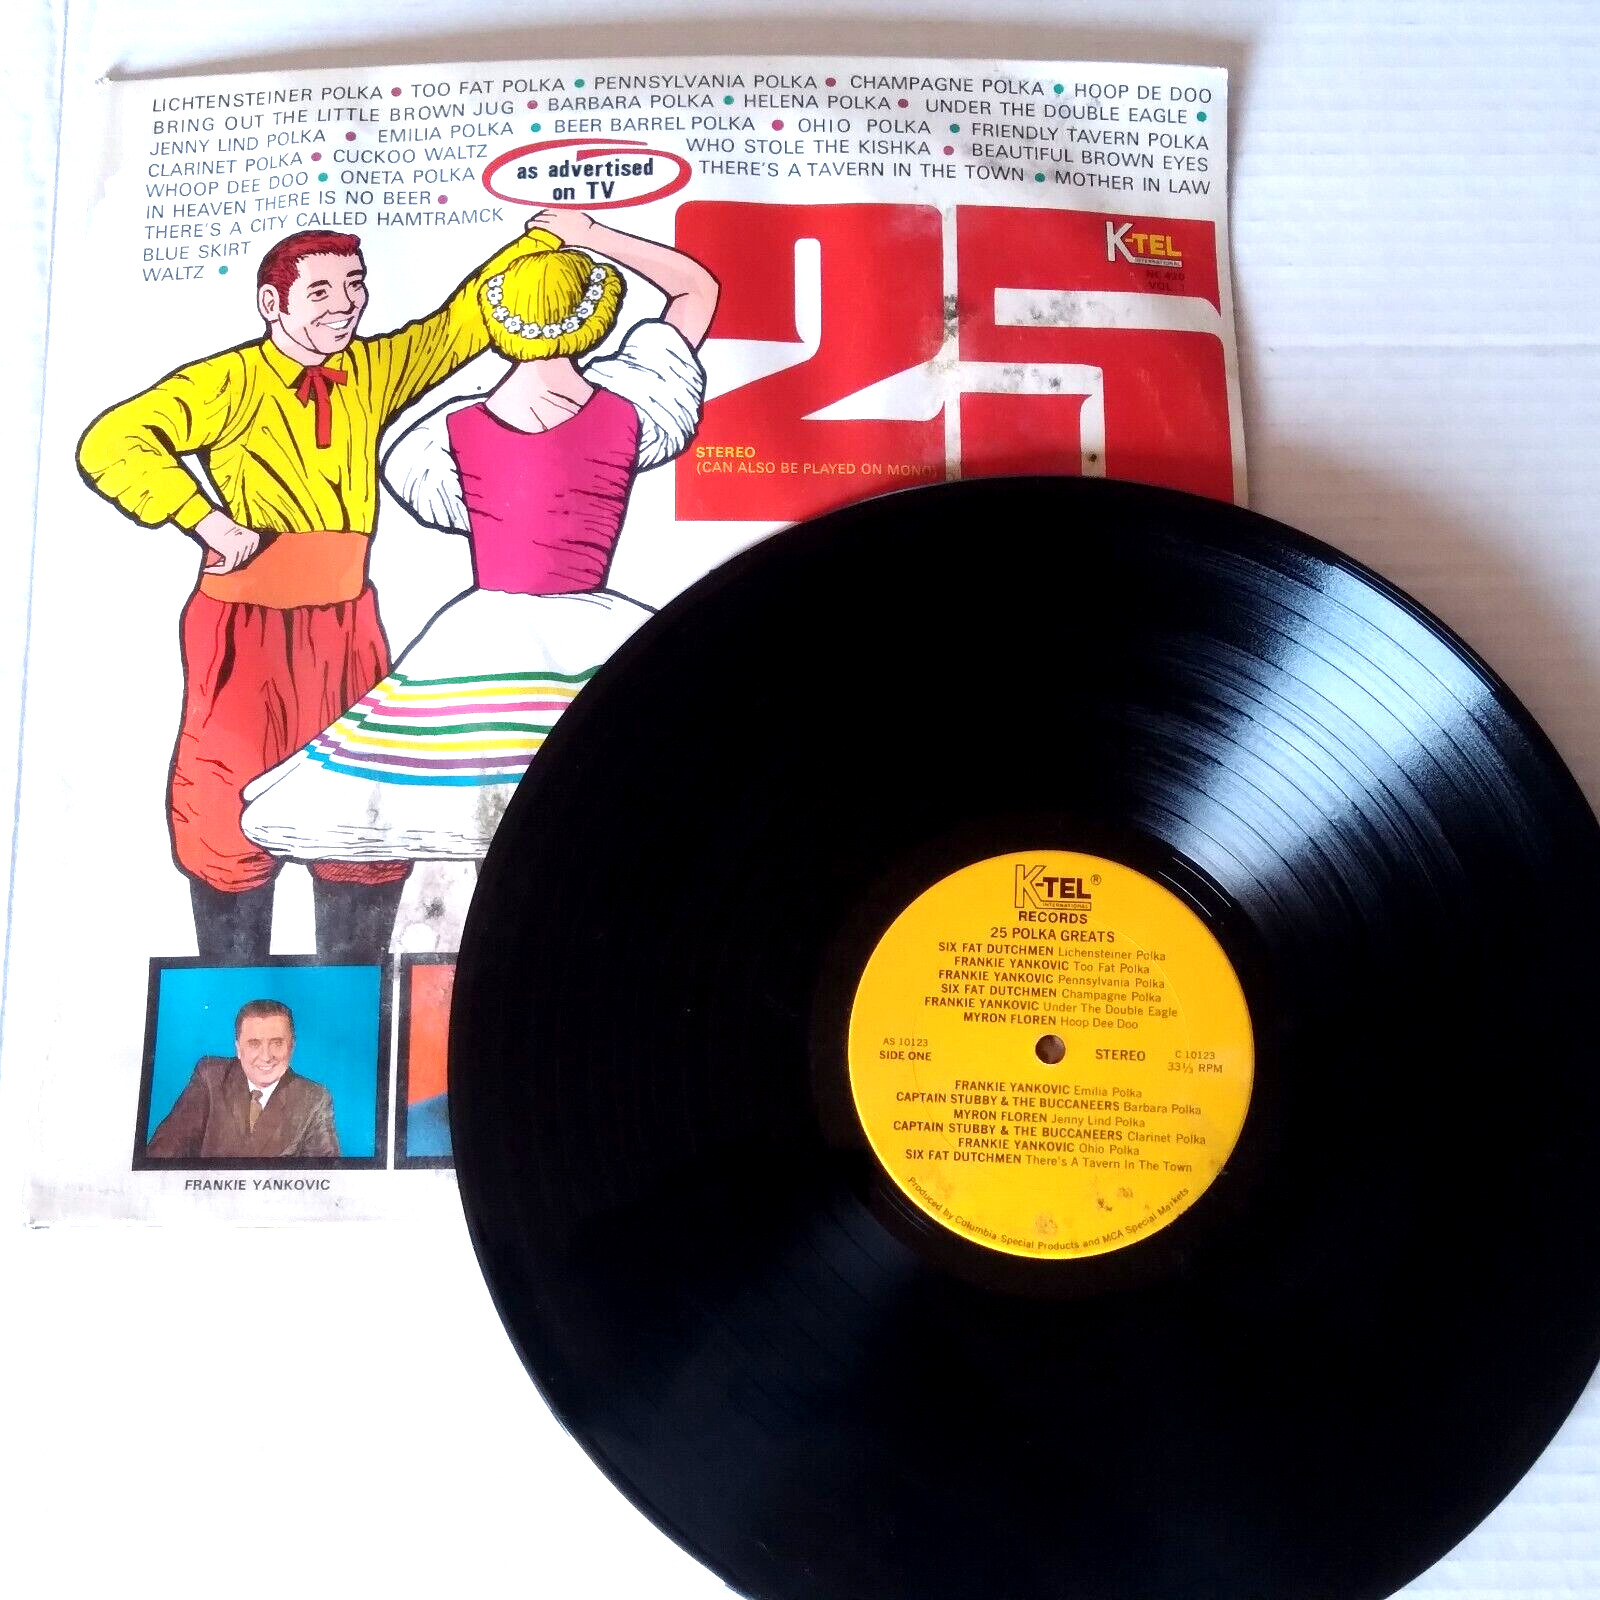 25 POLKA GREATS Frankie Yankovic Vtg Vinyl LP Record Album K-TEL Stereo NC 420